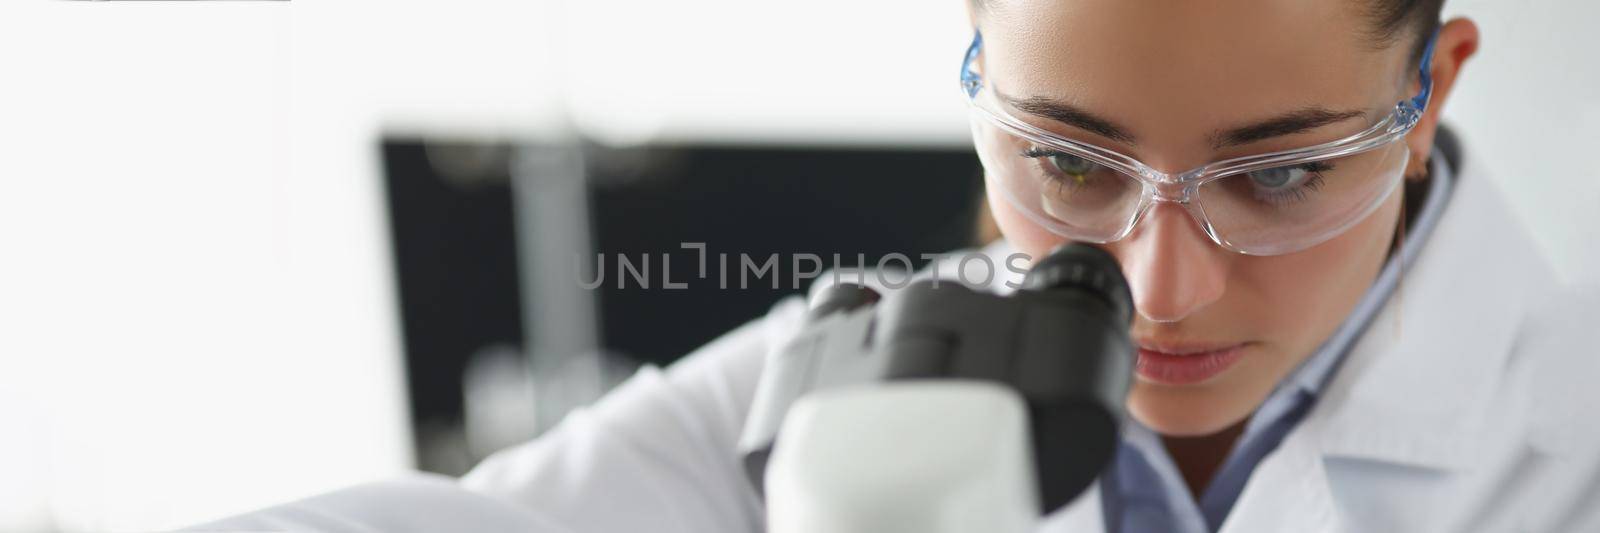 Portrait of female chemist investigate sample under microscope equipment in lab. Woman scientist explore material, protective uniform. Laboratory concept